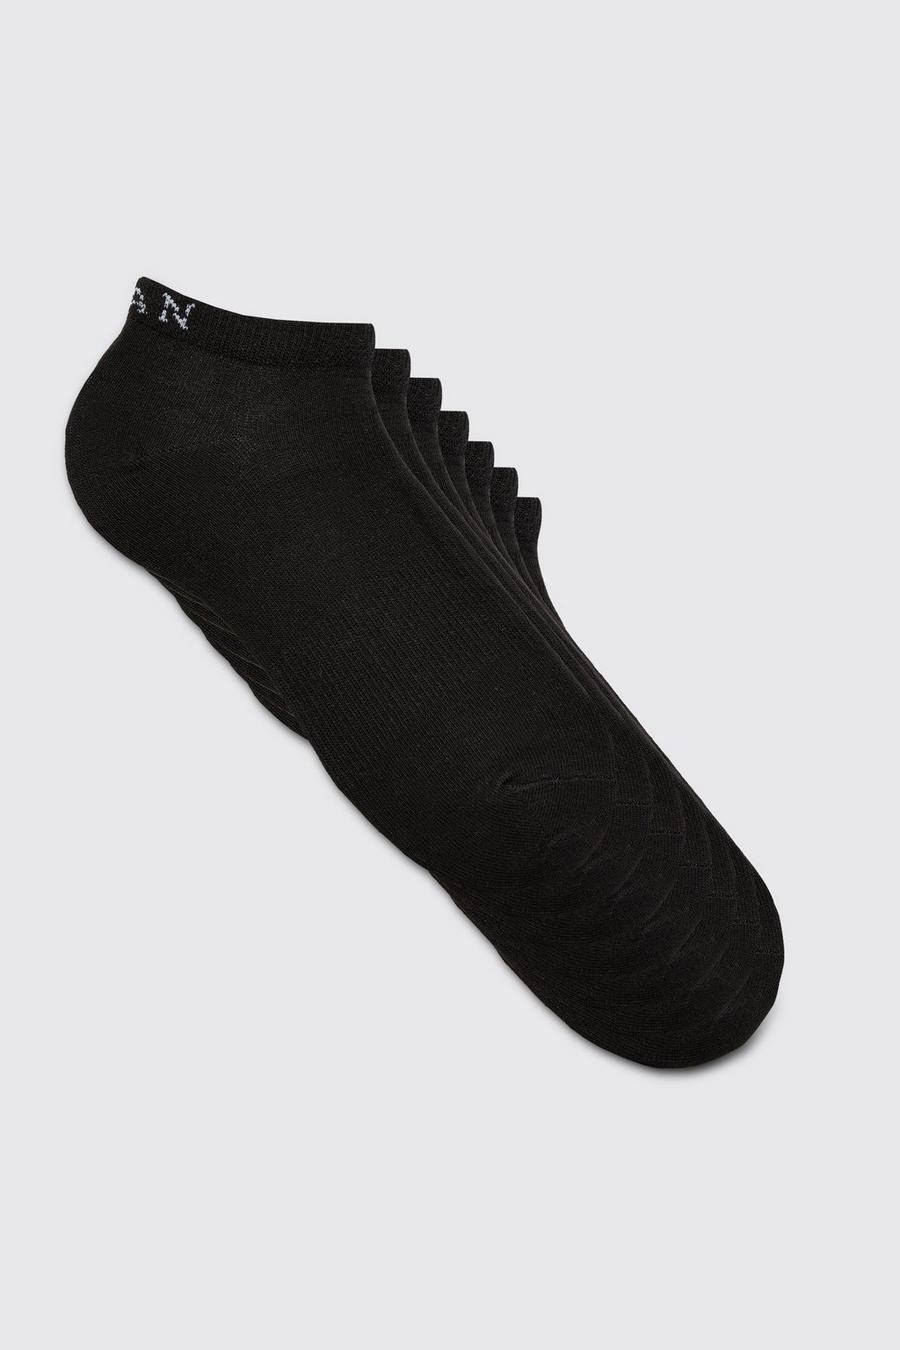 Pack de 7 pares de calcetines MAN deportivos, Black